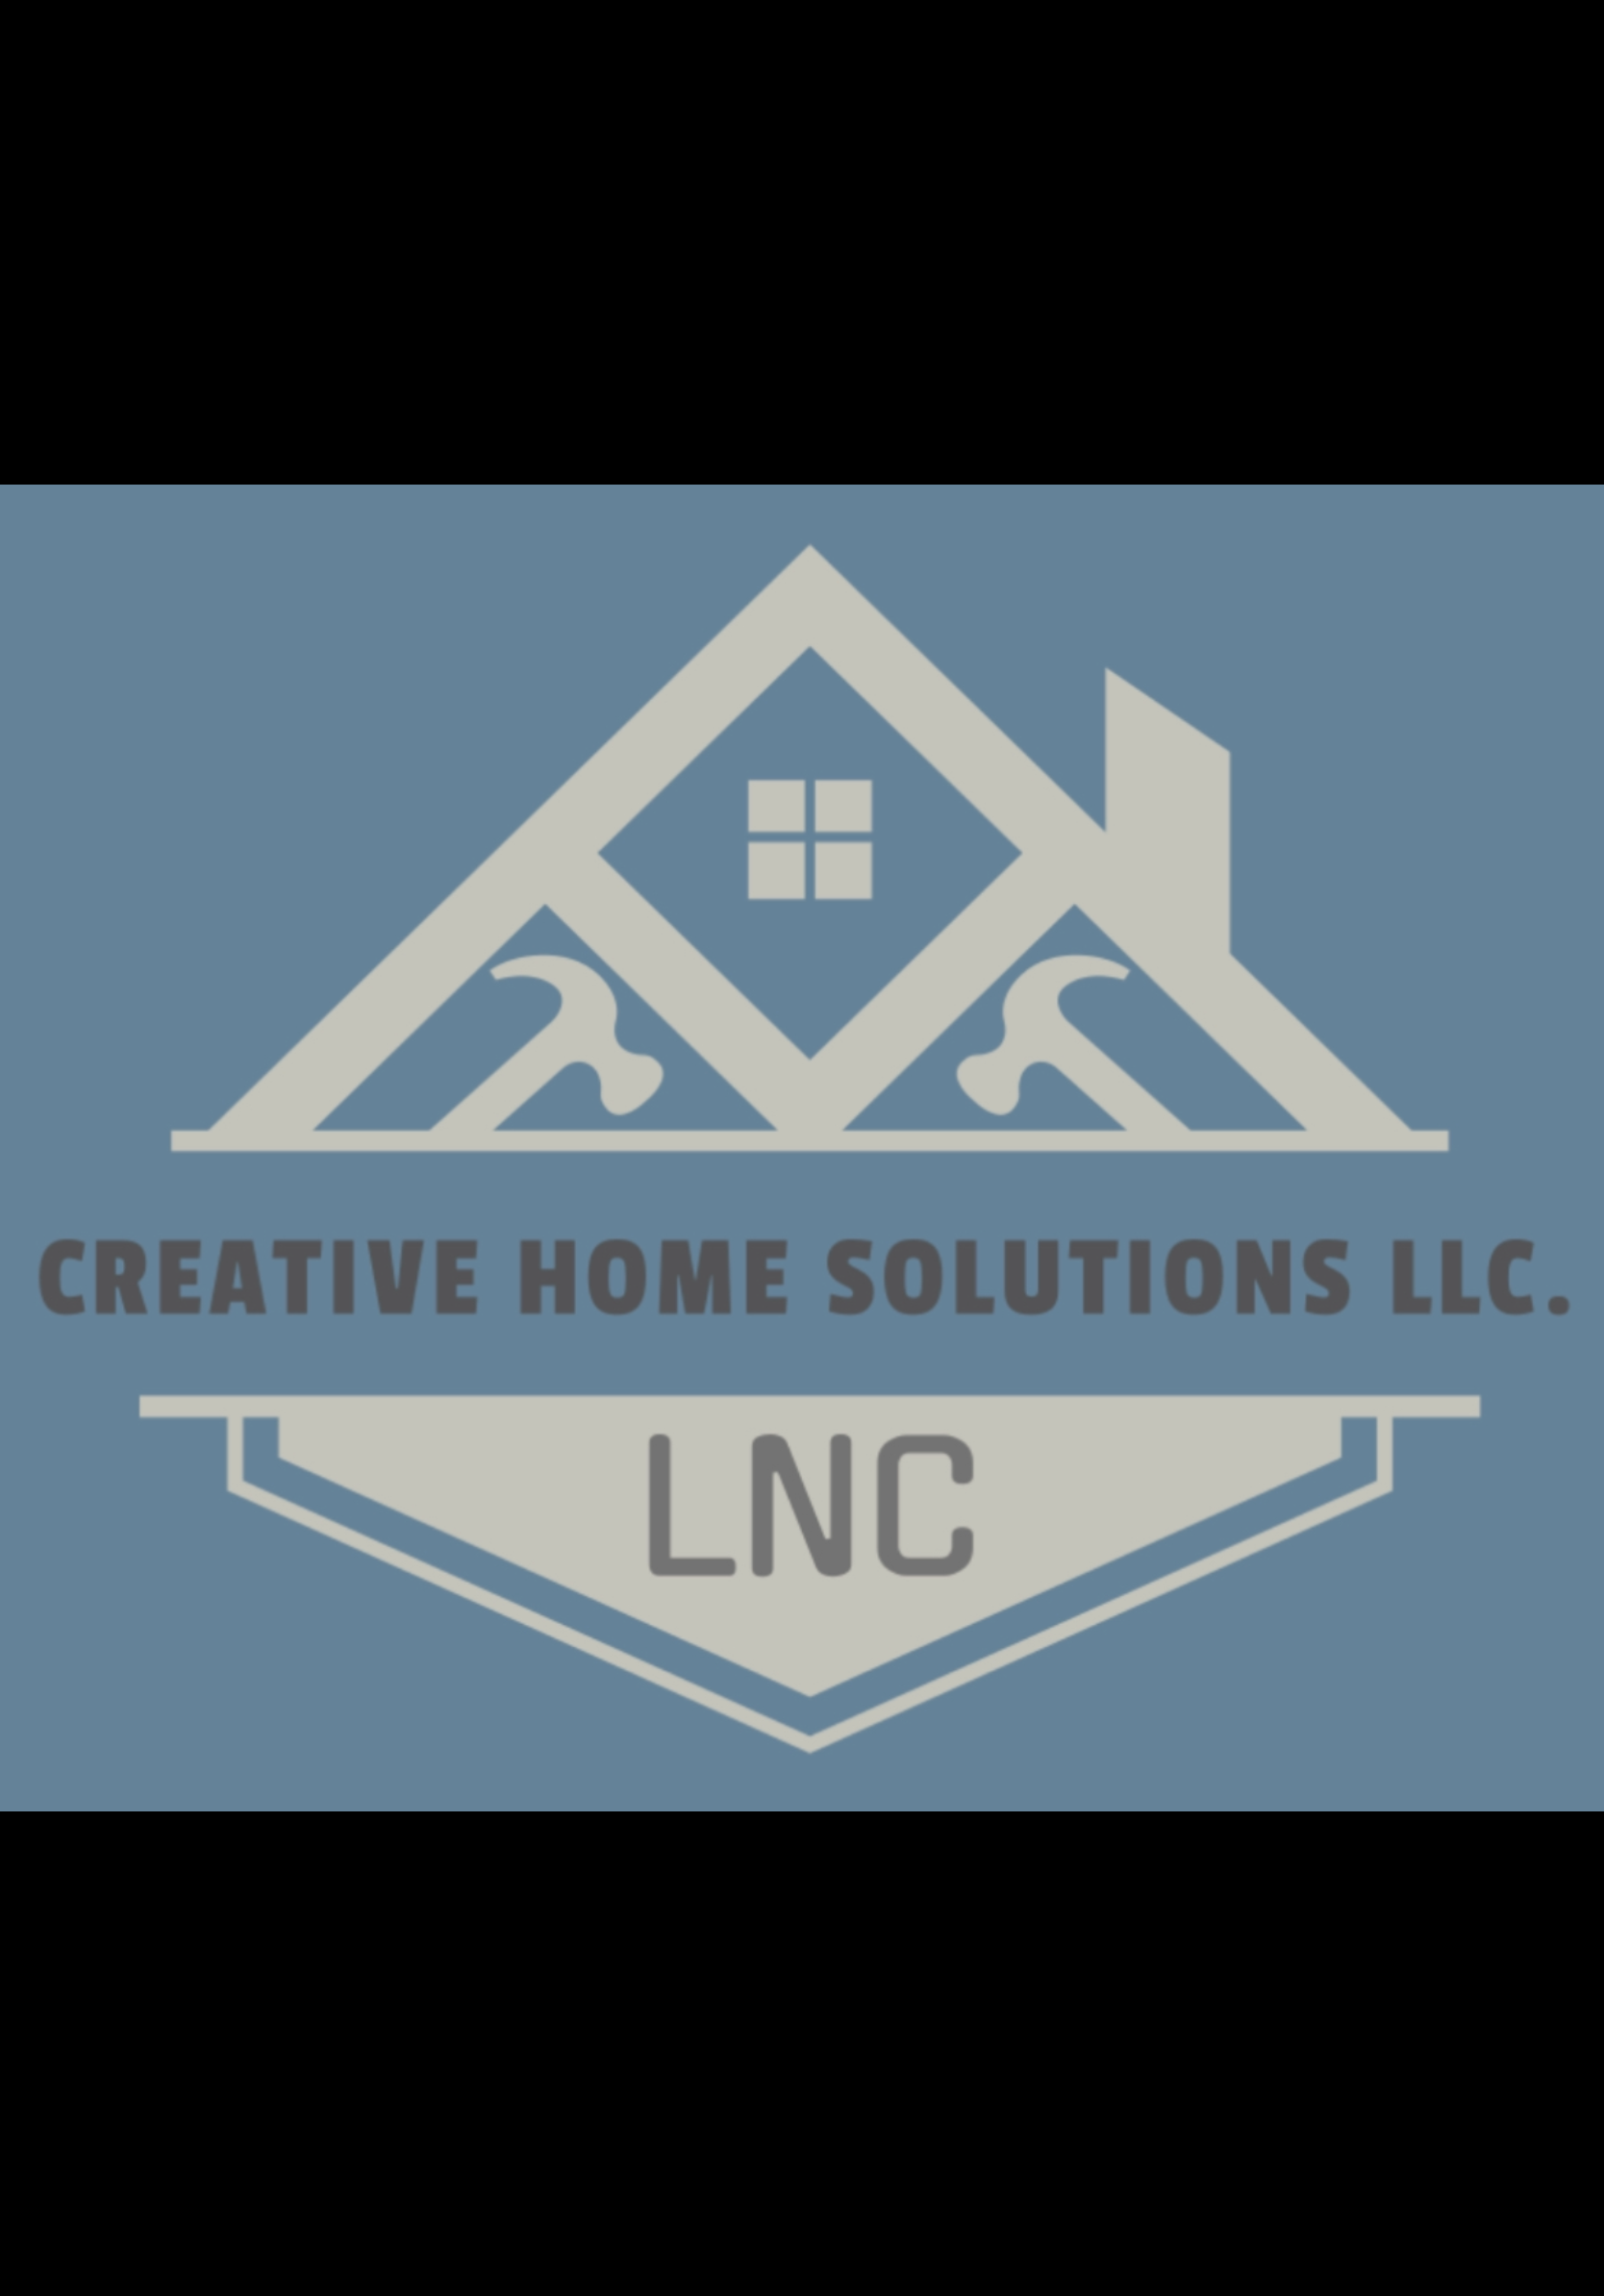 LNC Creative Home Solutions Logo